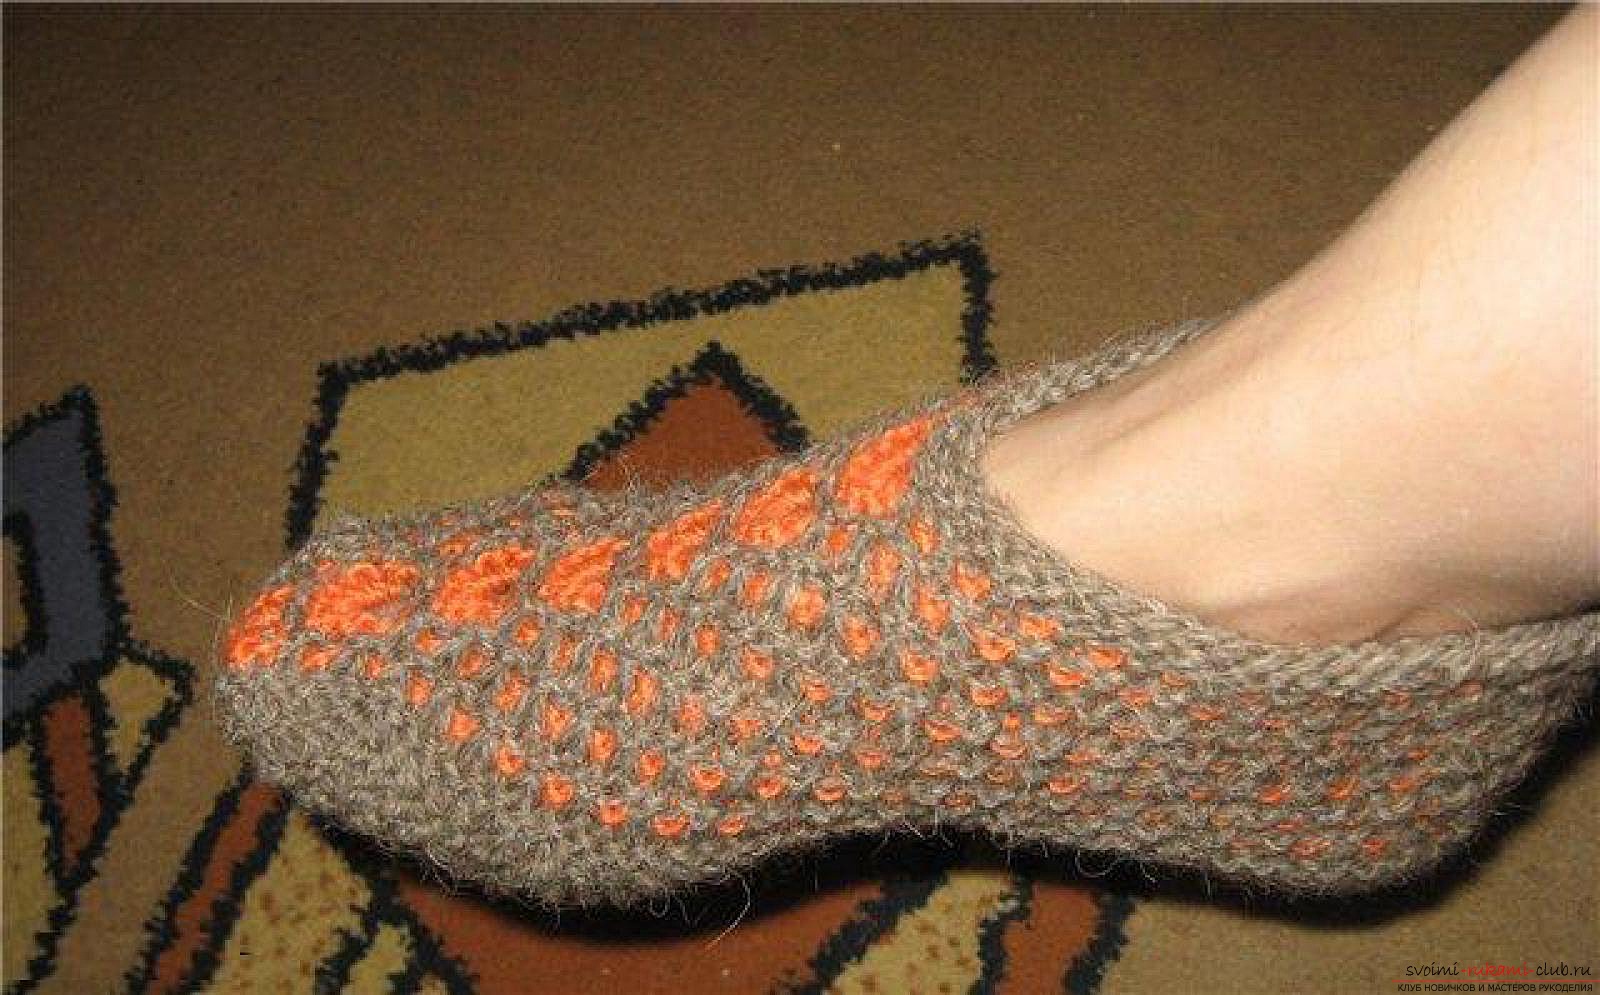 knitted knitting needles. Photo №4